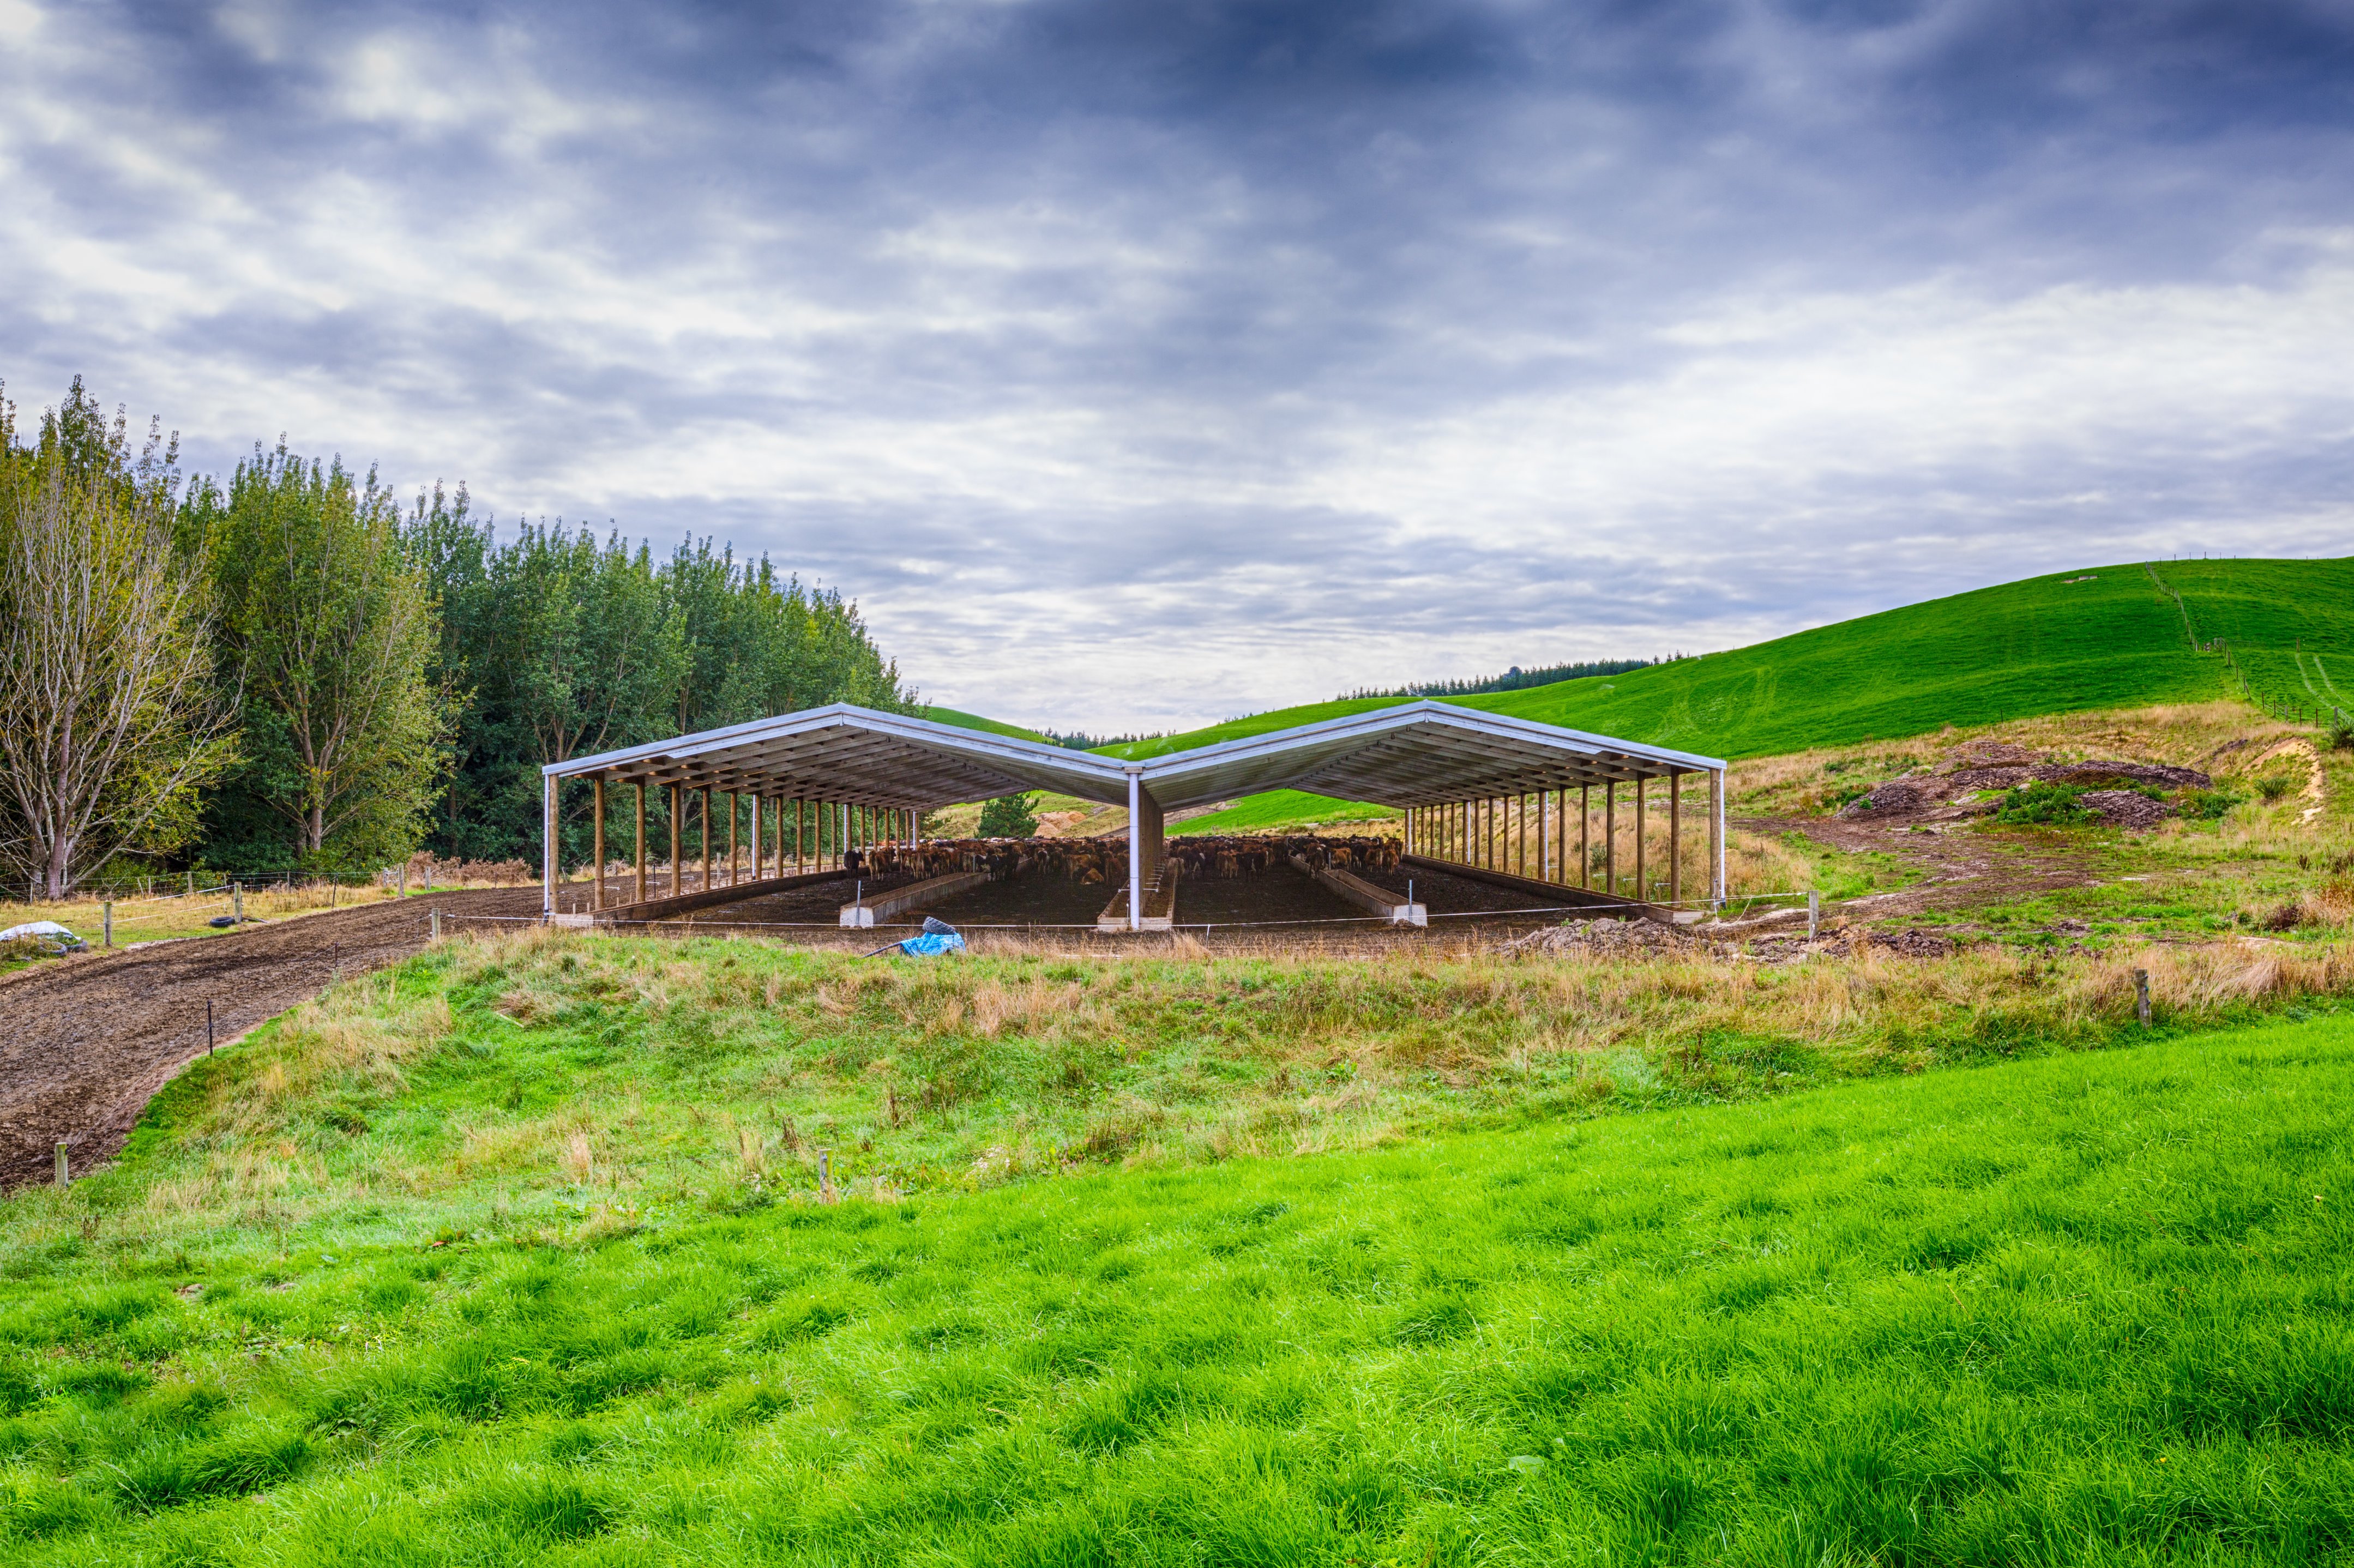 Alpine animal shelter shed in the NZ landscape